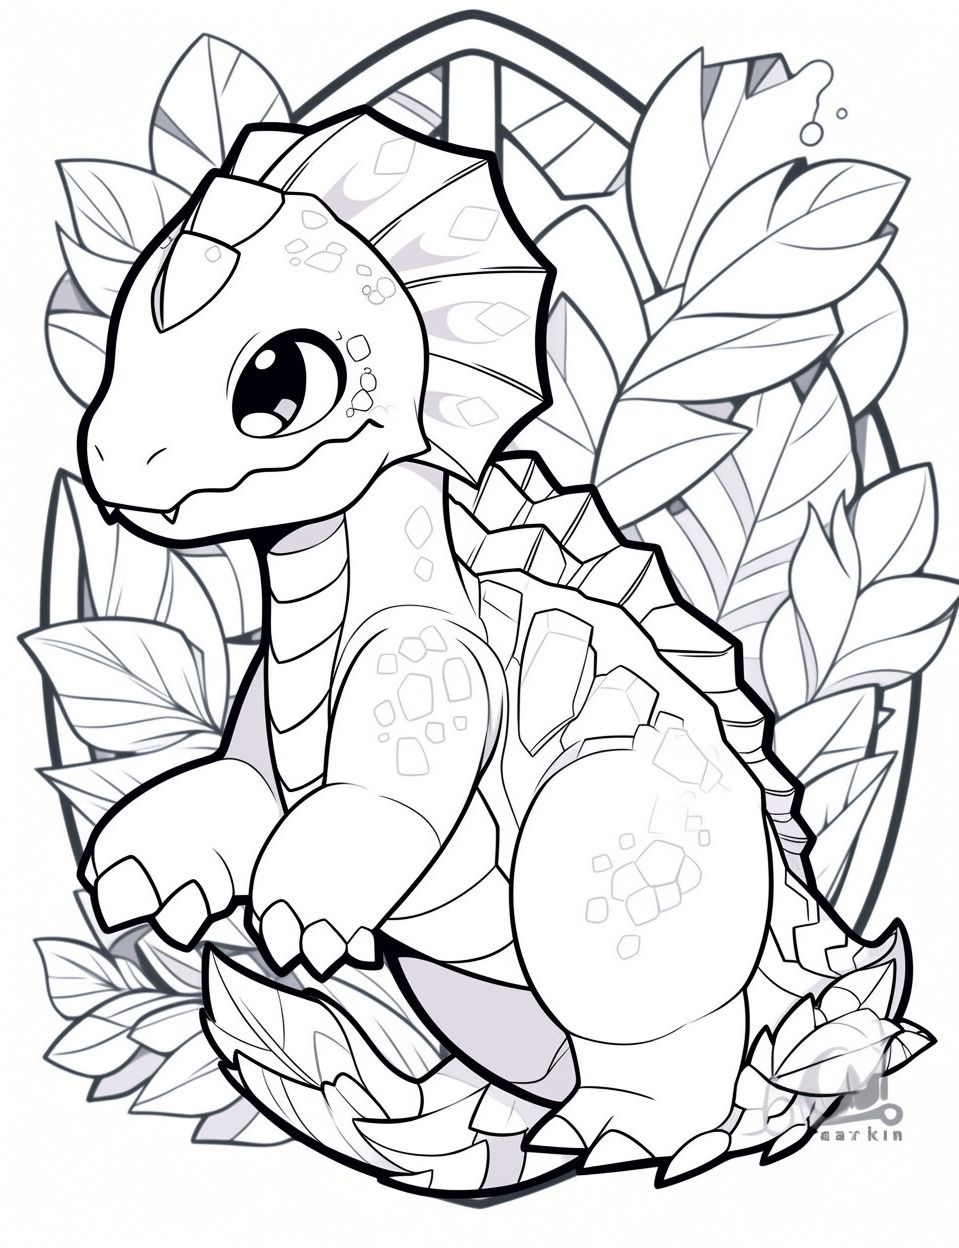 Cute Kawaii Dinosaur Coloring Book, Engaging and Fun Designs, Smiling Dino Characters, PDF